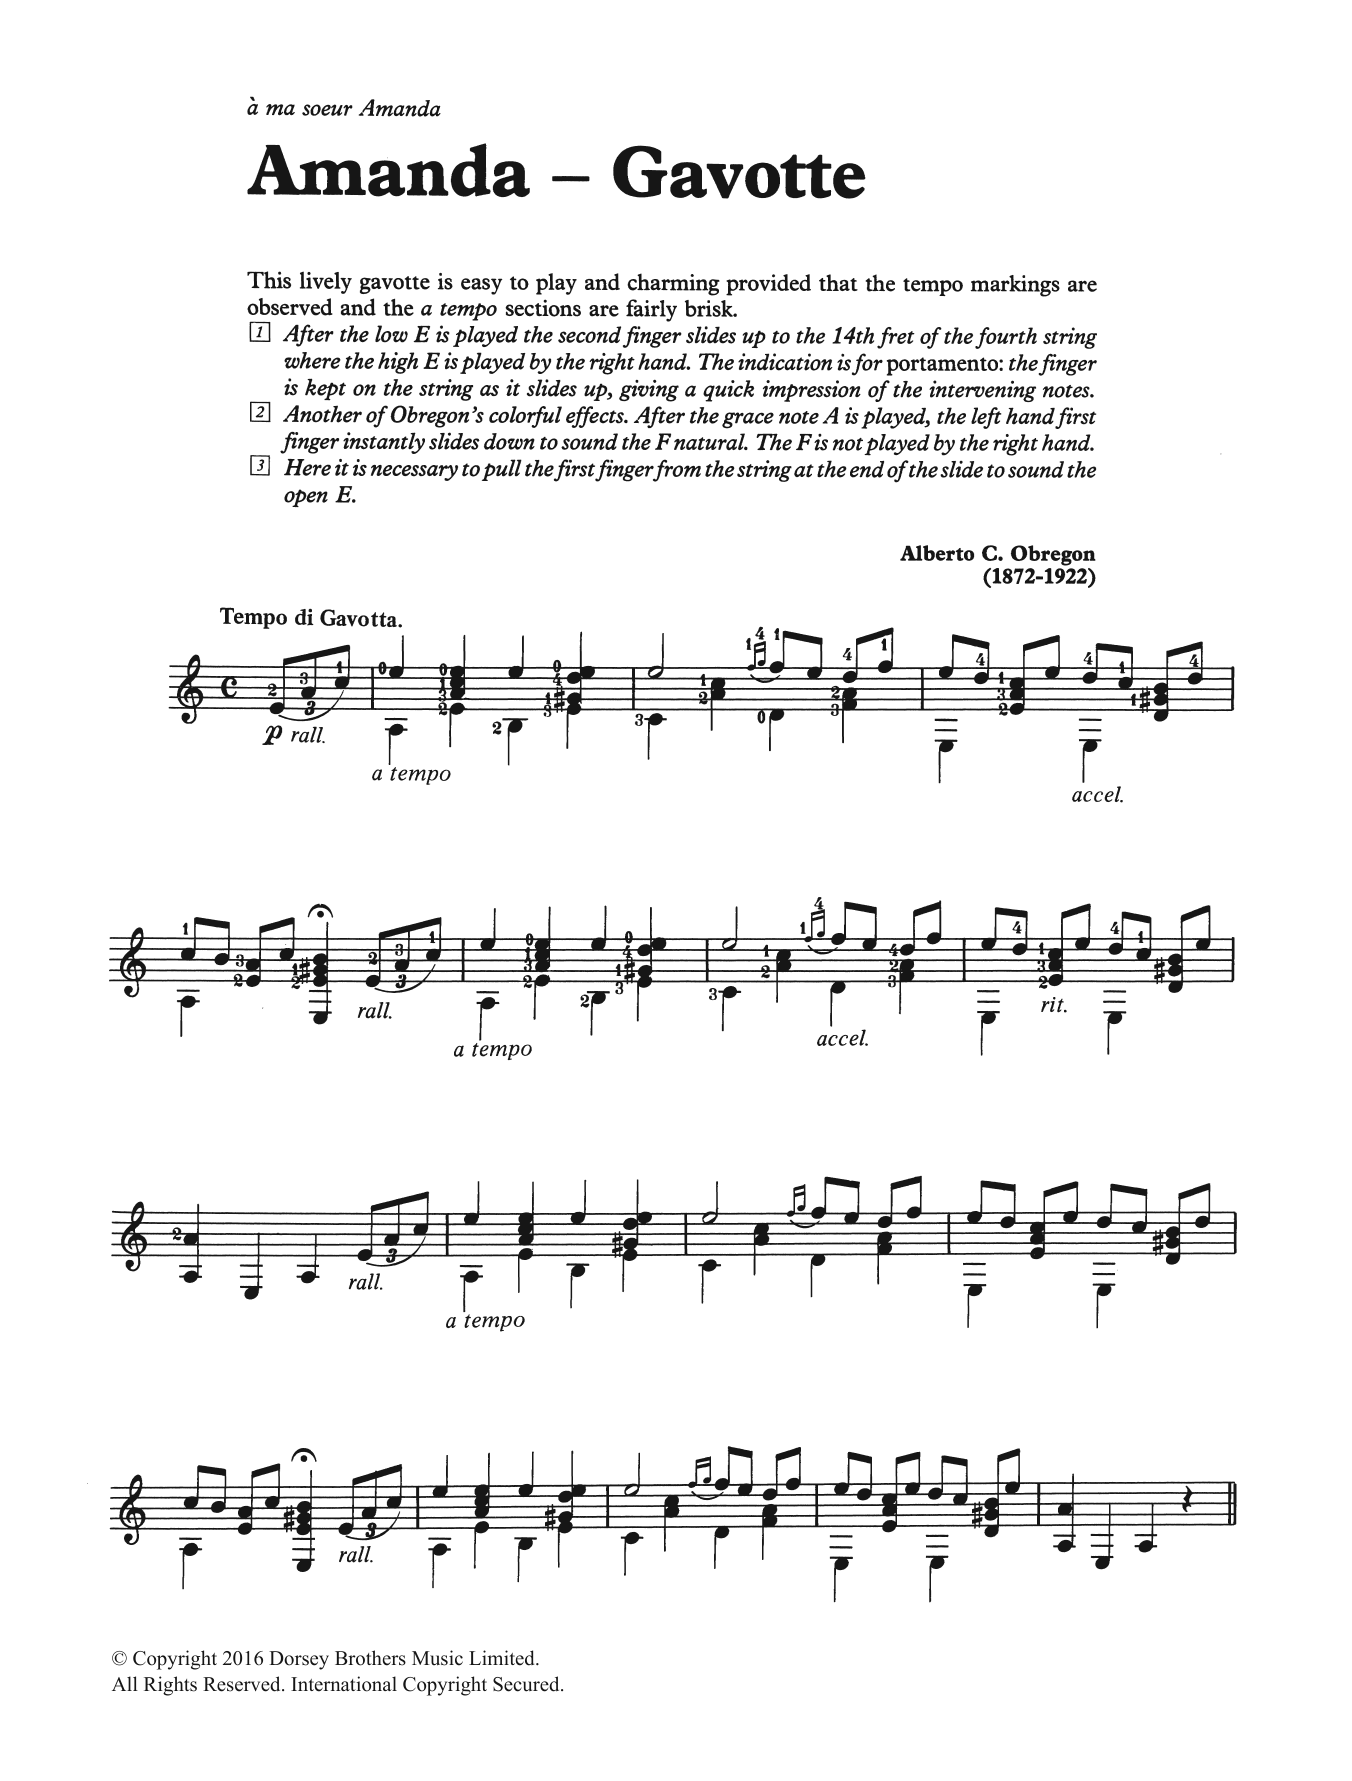 Alberto C. Obregon Amanda - Gavotte sheet music notes and chords arranged for Easy Guitar